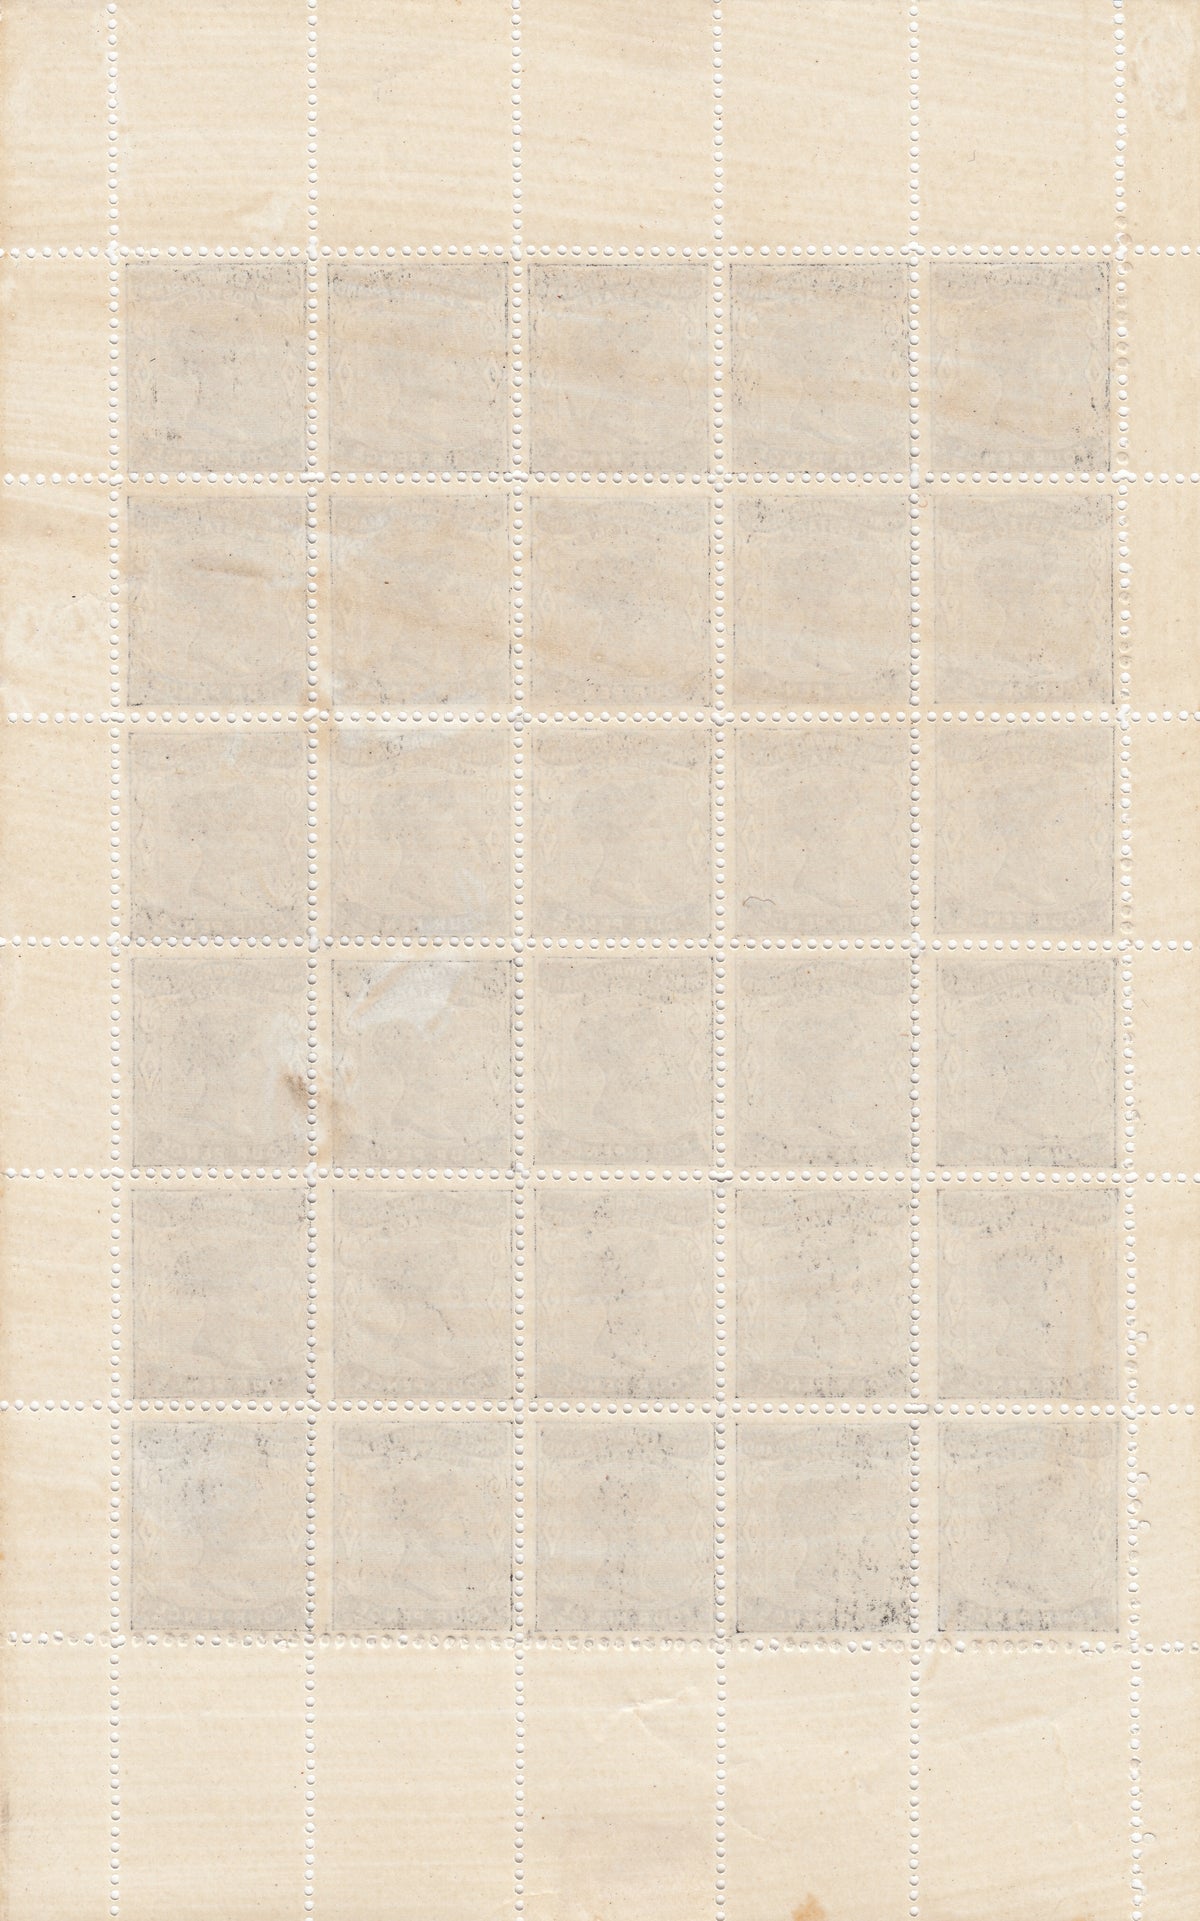 0009PE1801 - Prince Edward Island #9 - Mint Full Sheet of 30